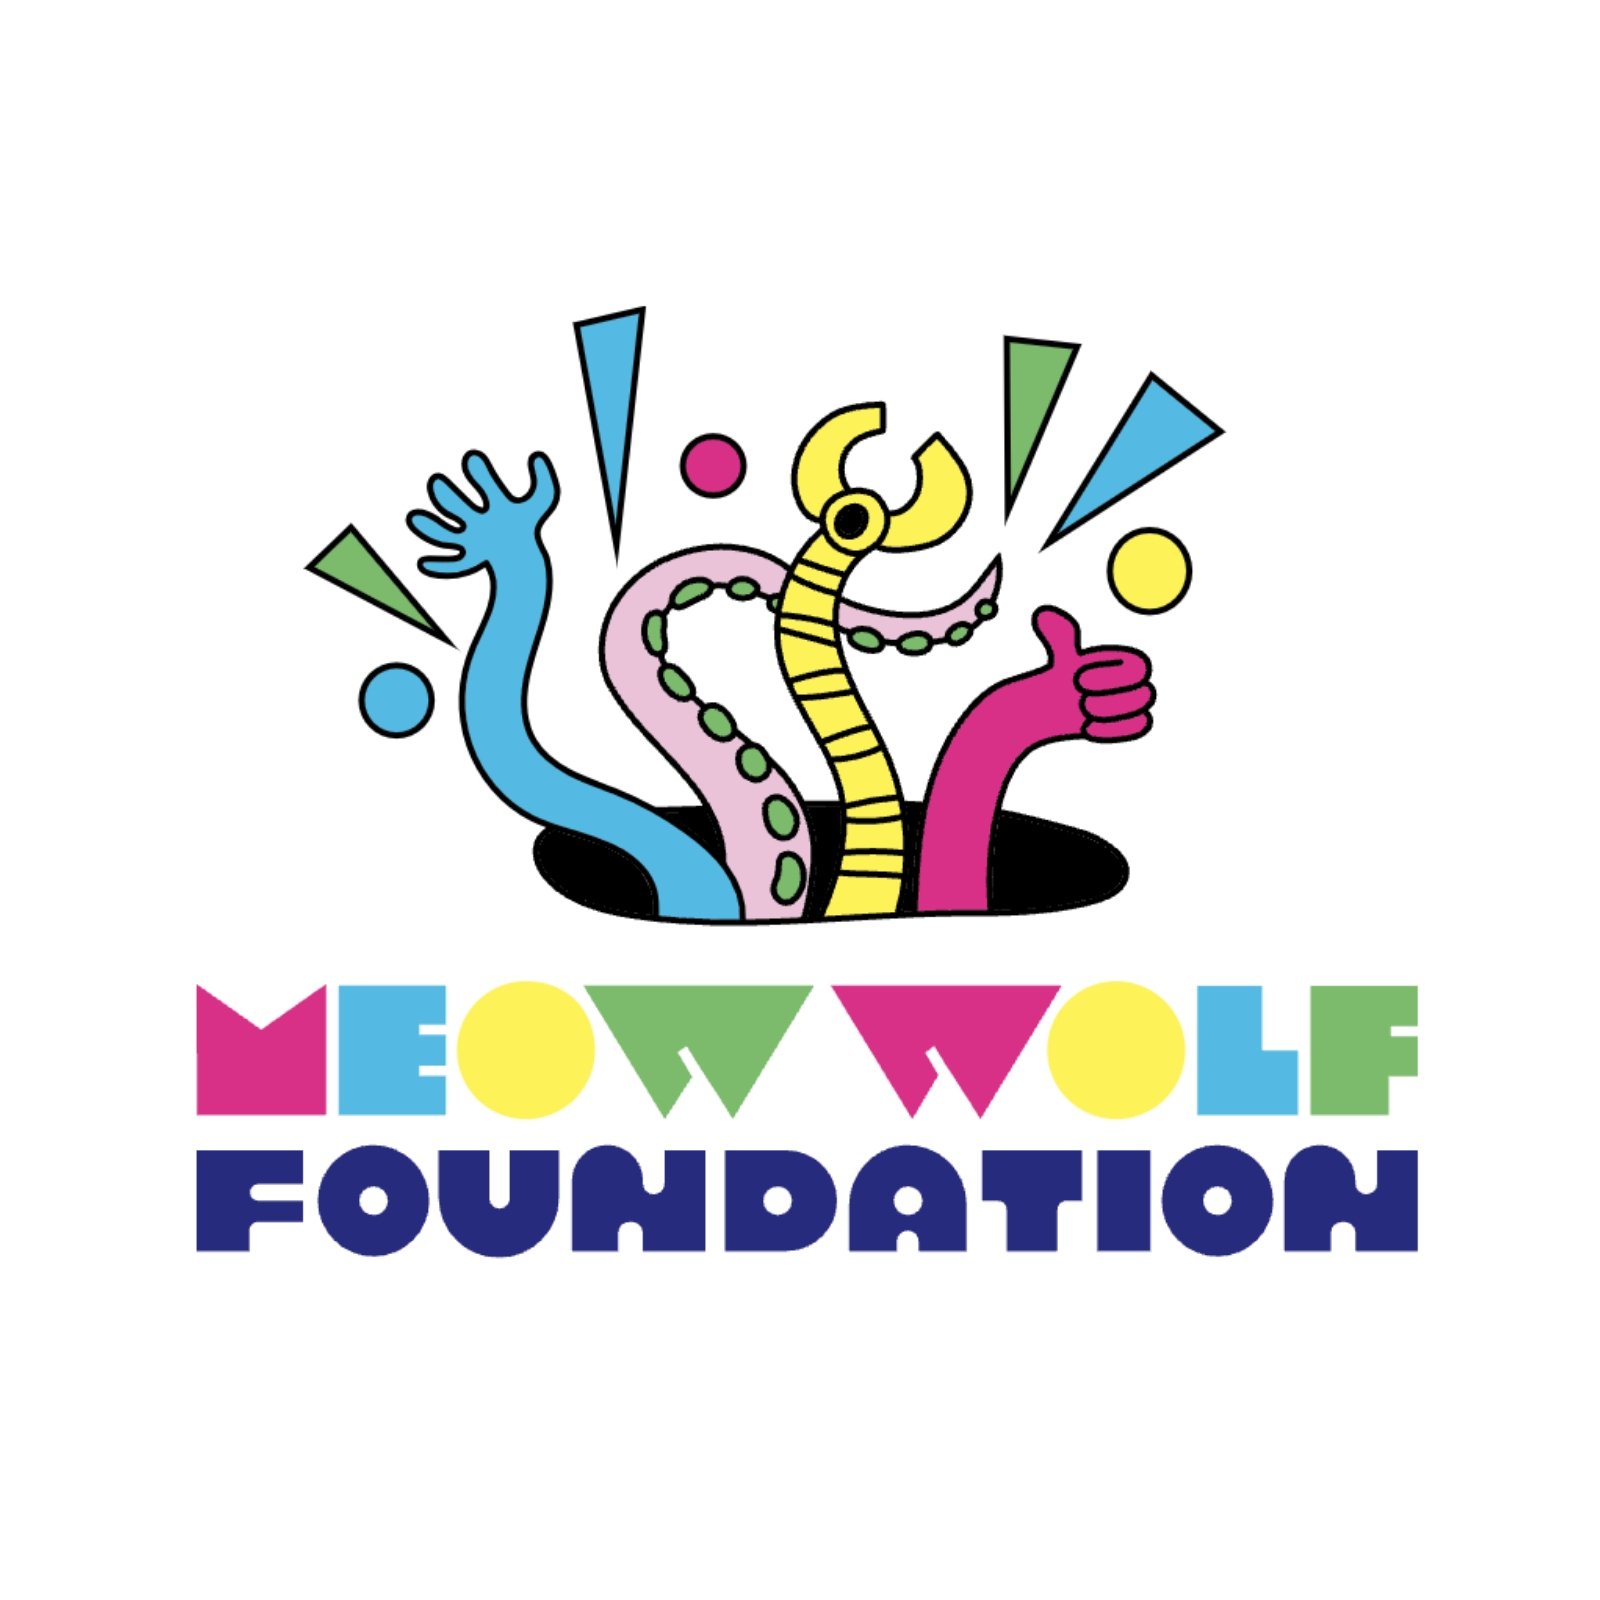 Meow Wolf Foundation copy.jpg